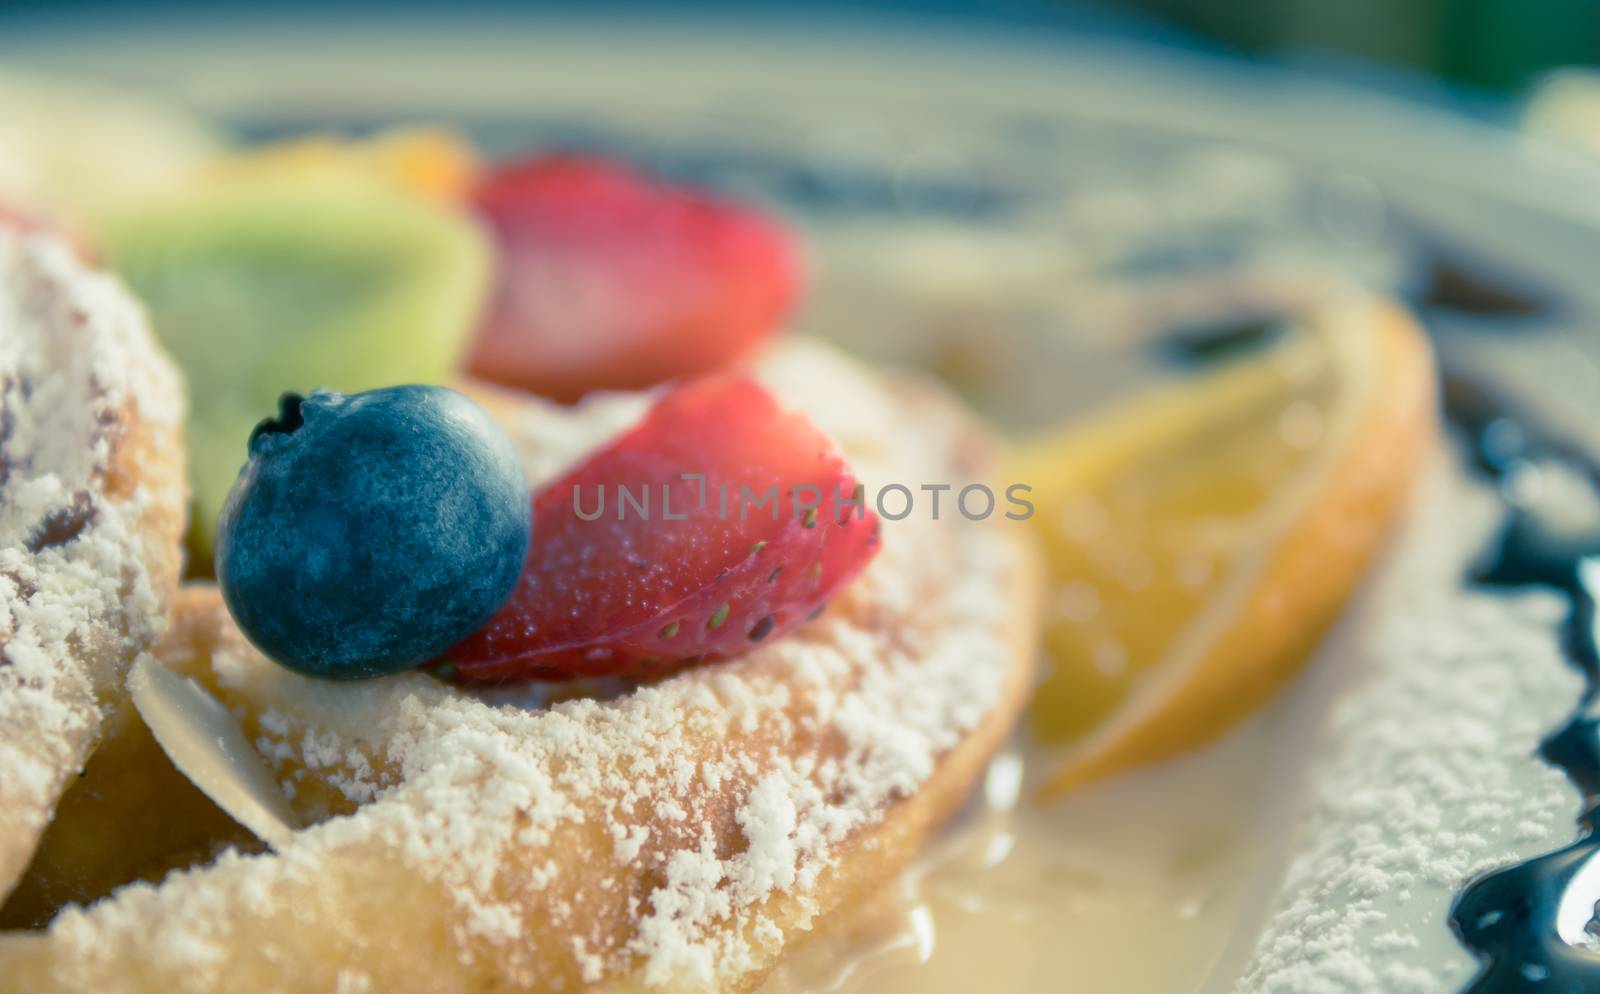 Vintage Blueberry Strawberry Kiwi Lemon Waffle Icing Sugar Chocolate Dessert. Fruity dessert food and drink category